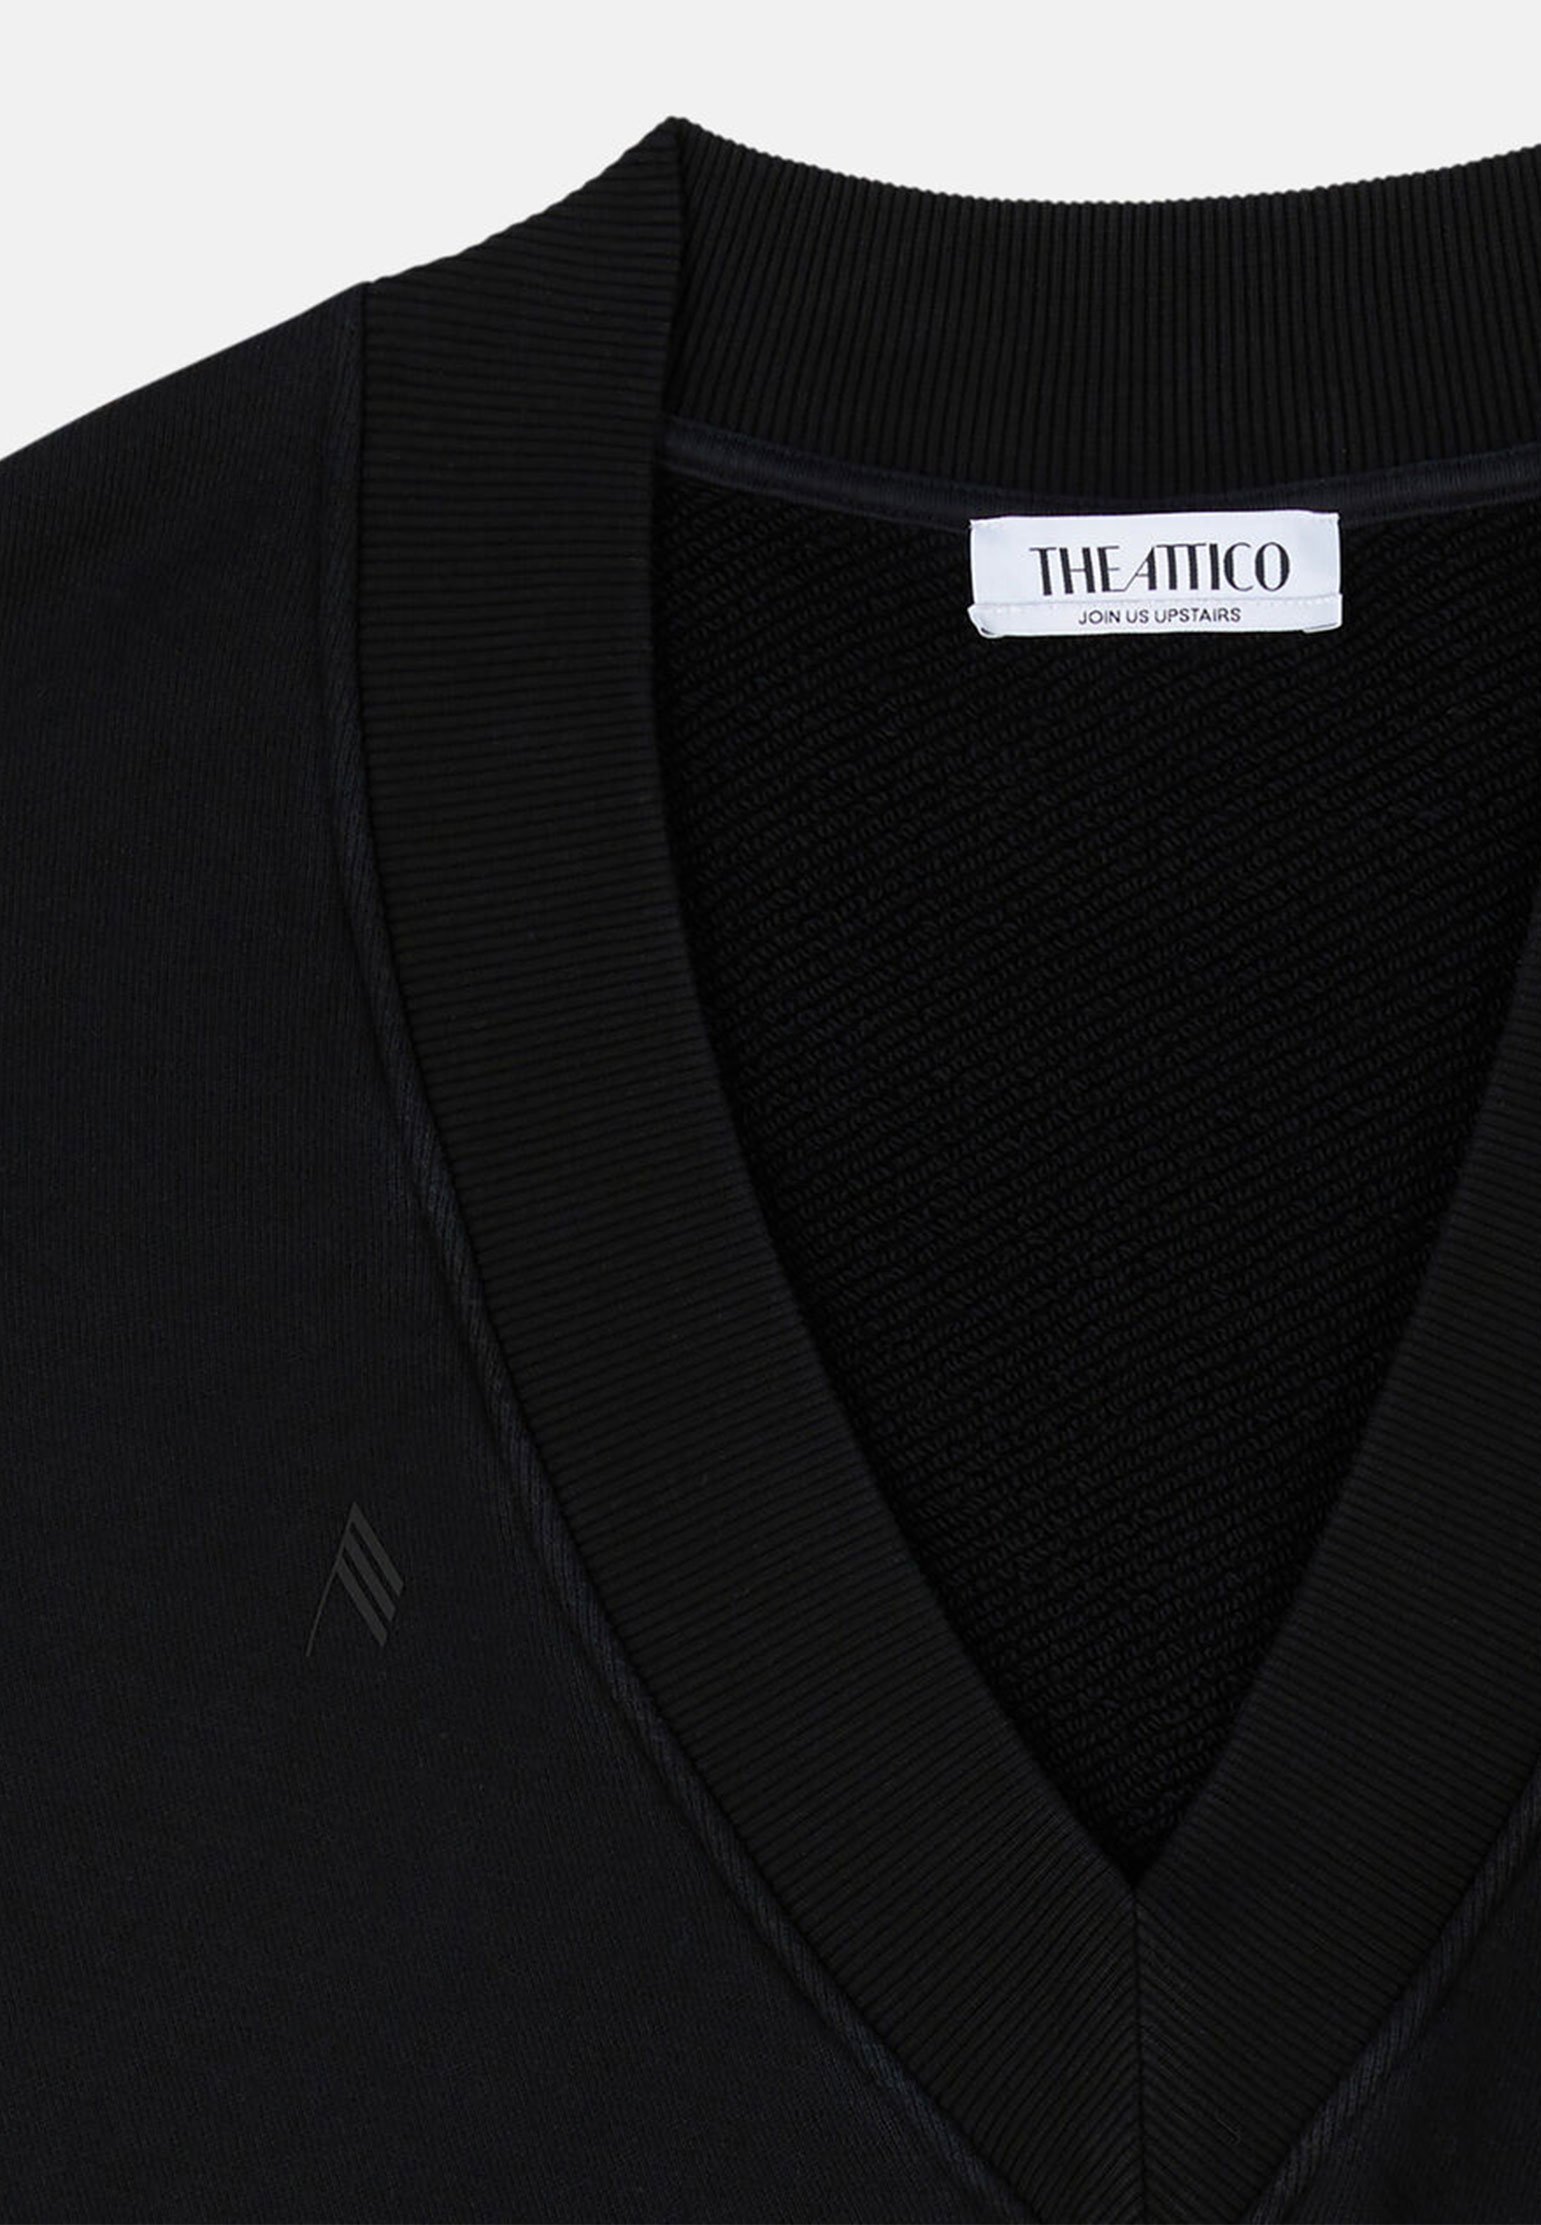 Sweatshirt THE ATTICO Color: black (Code: 3435) in online store Allure